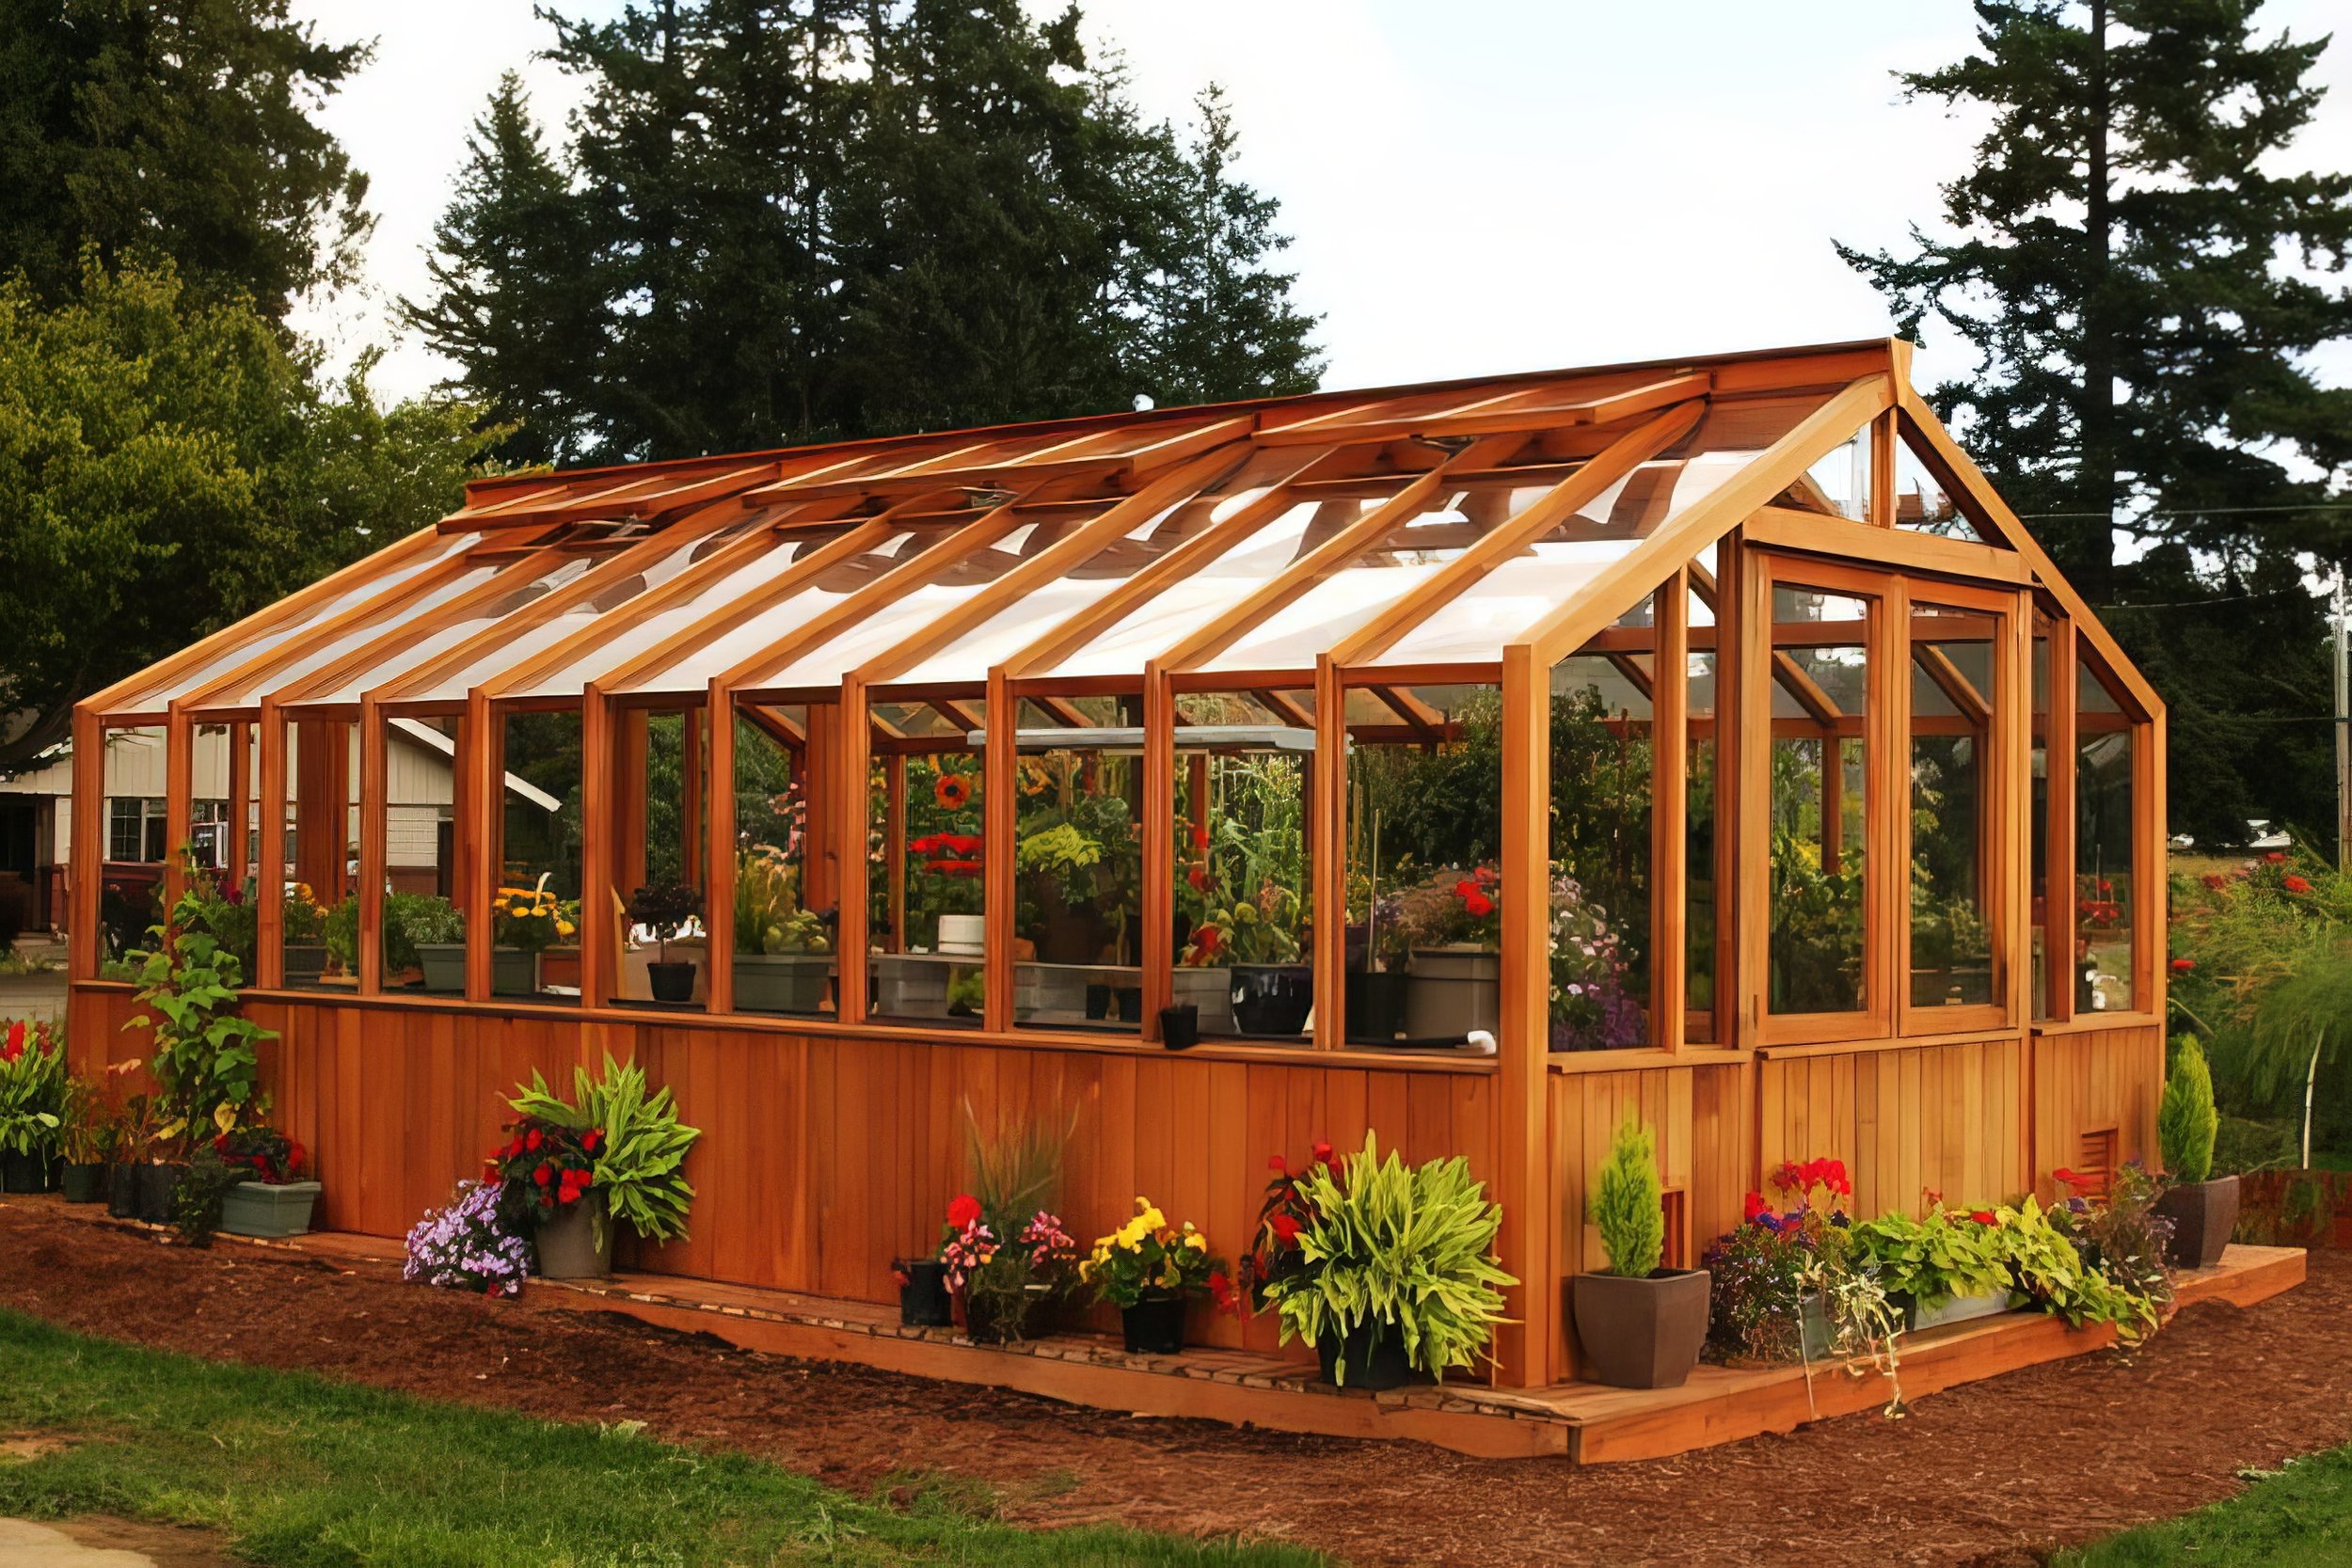  Greenhouse Oasis for Cultivating Fresh Garden Vegetables